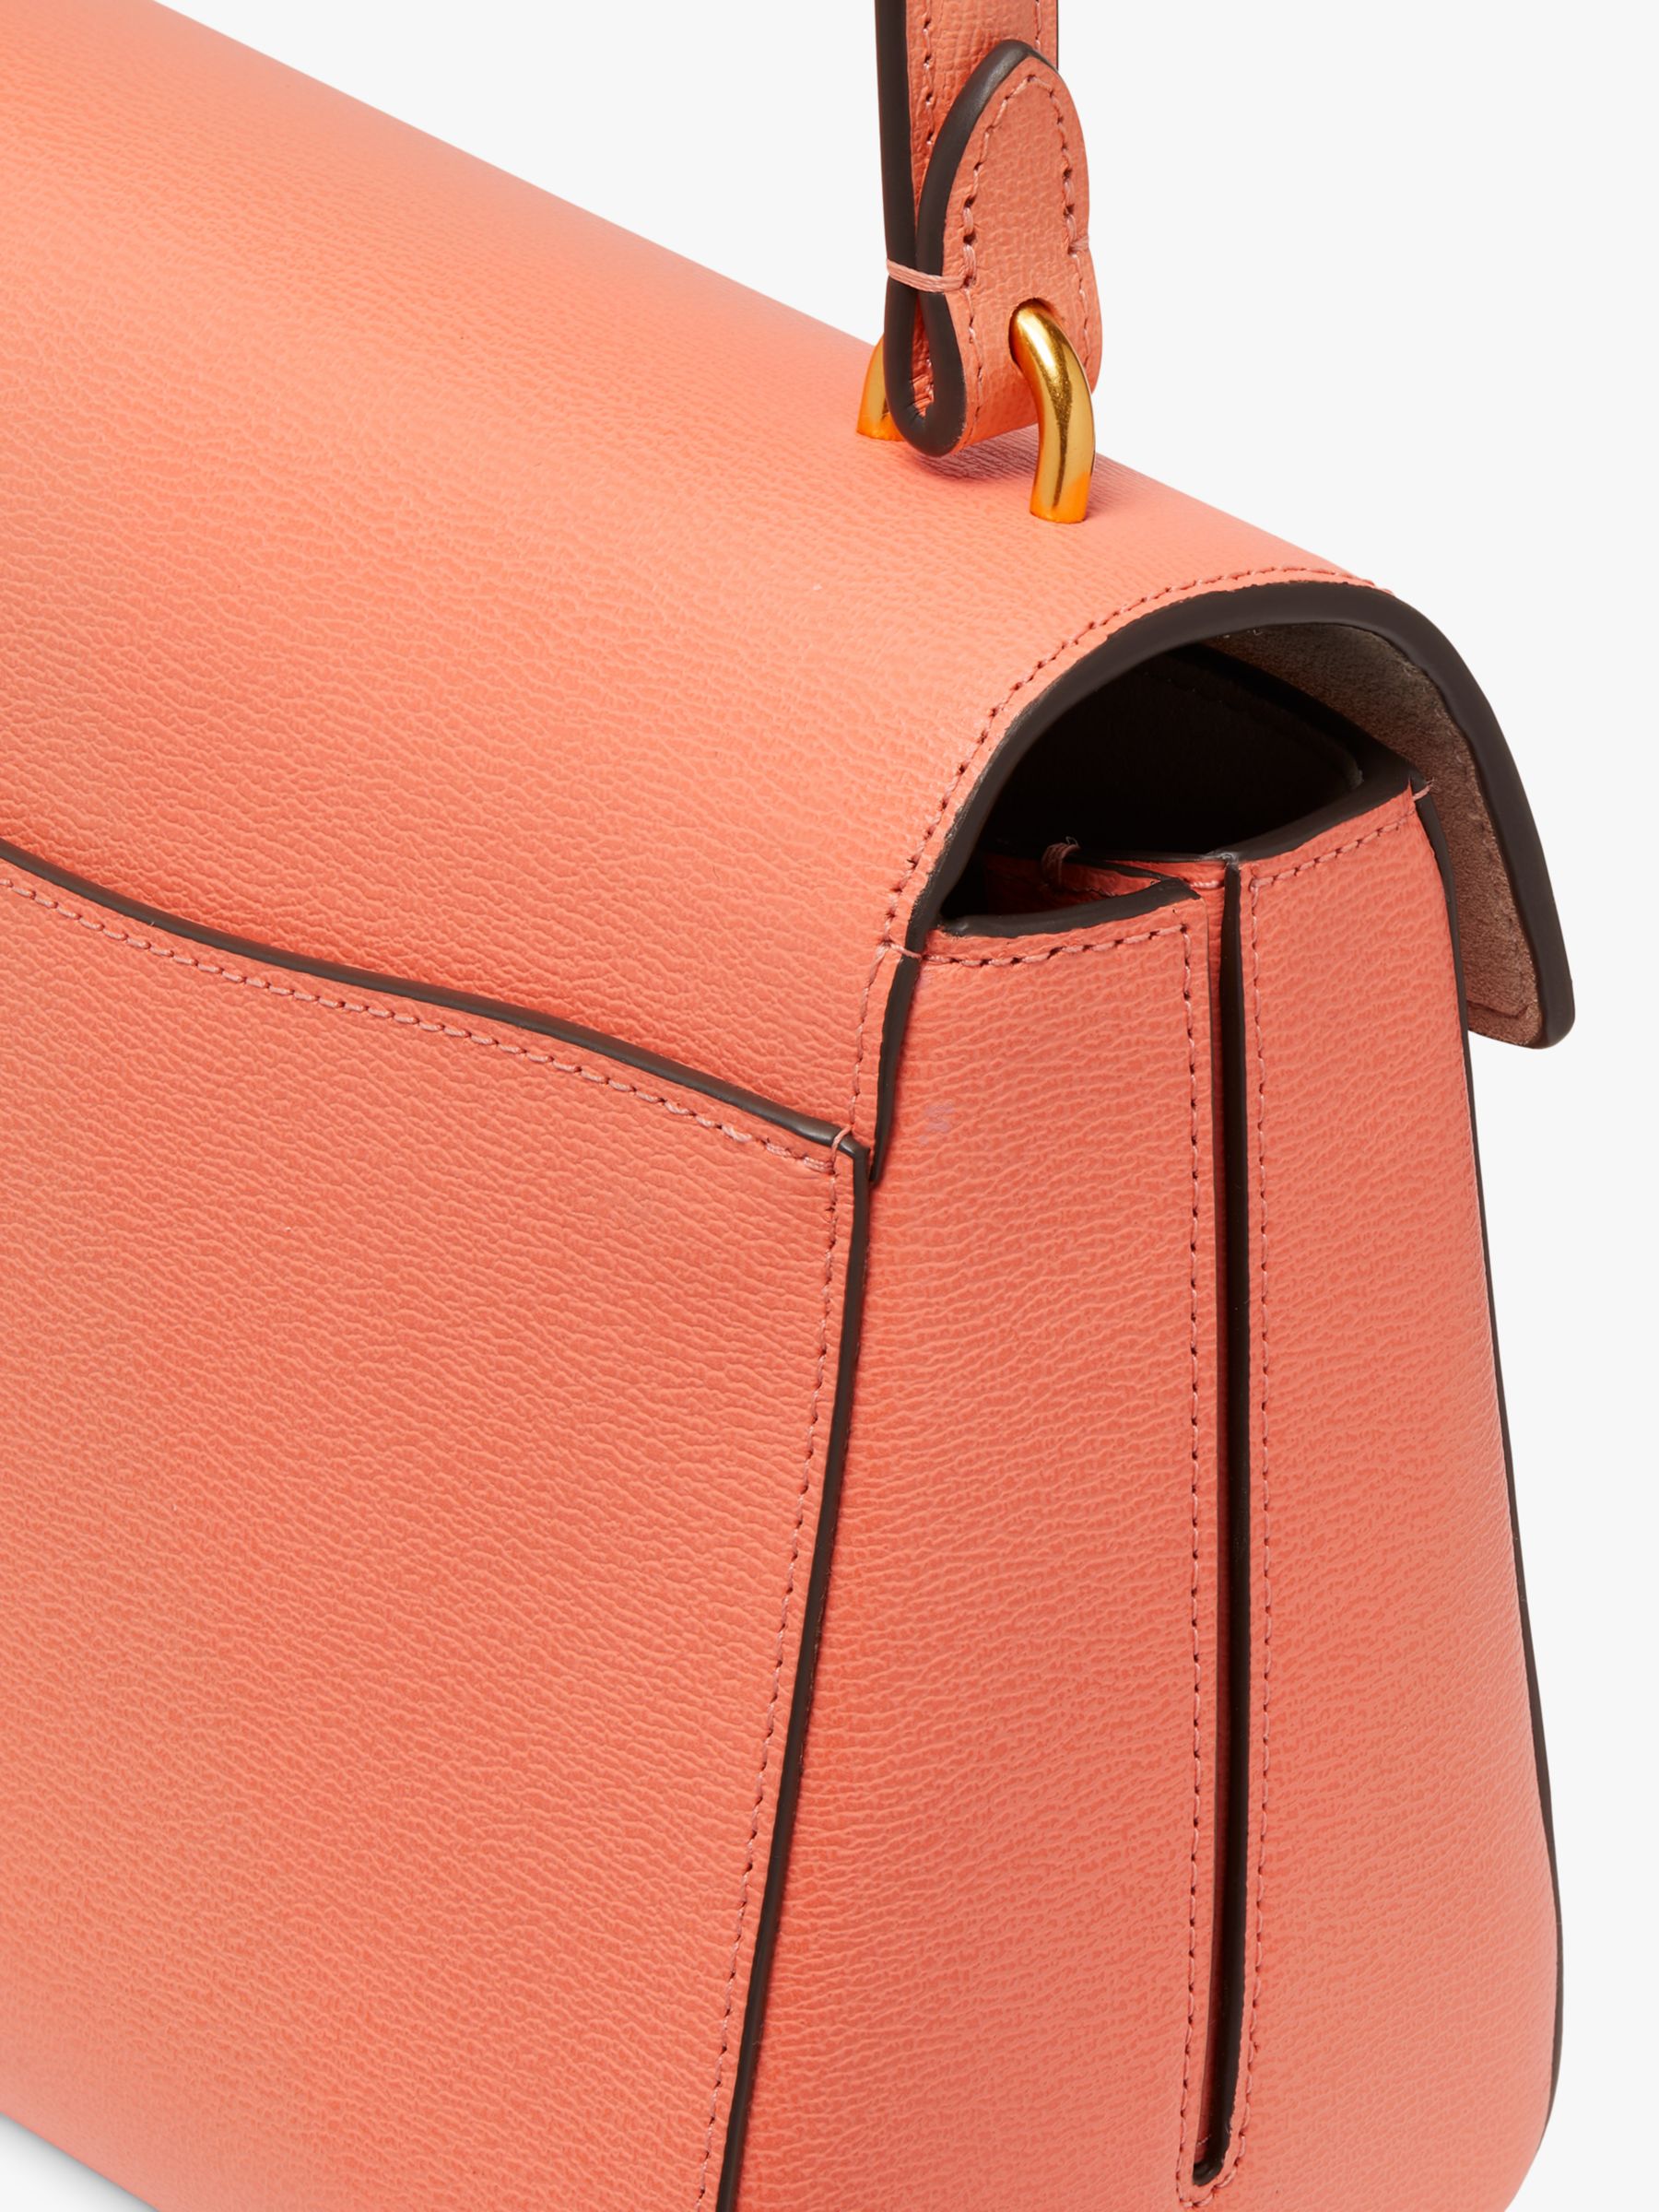 Buy kate spade new york Katie Leather Top Handle Grab Bag Online at johnlewis.com